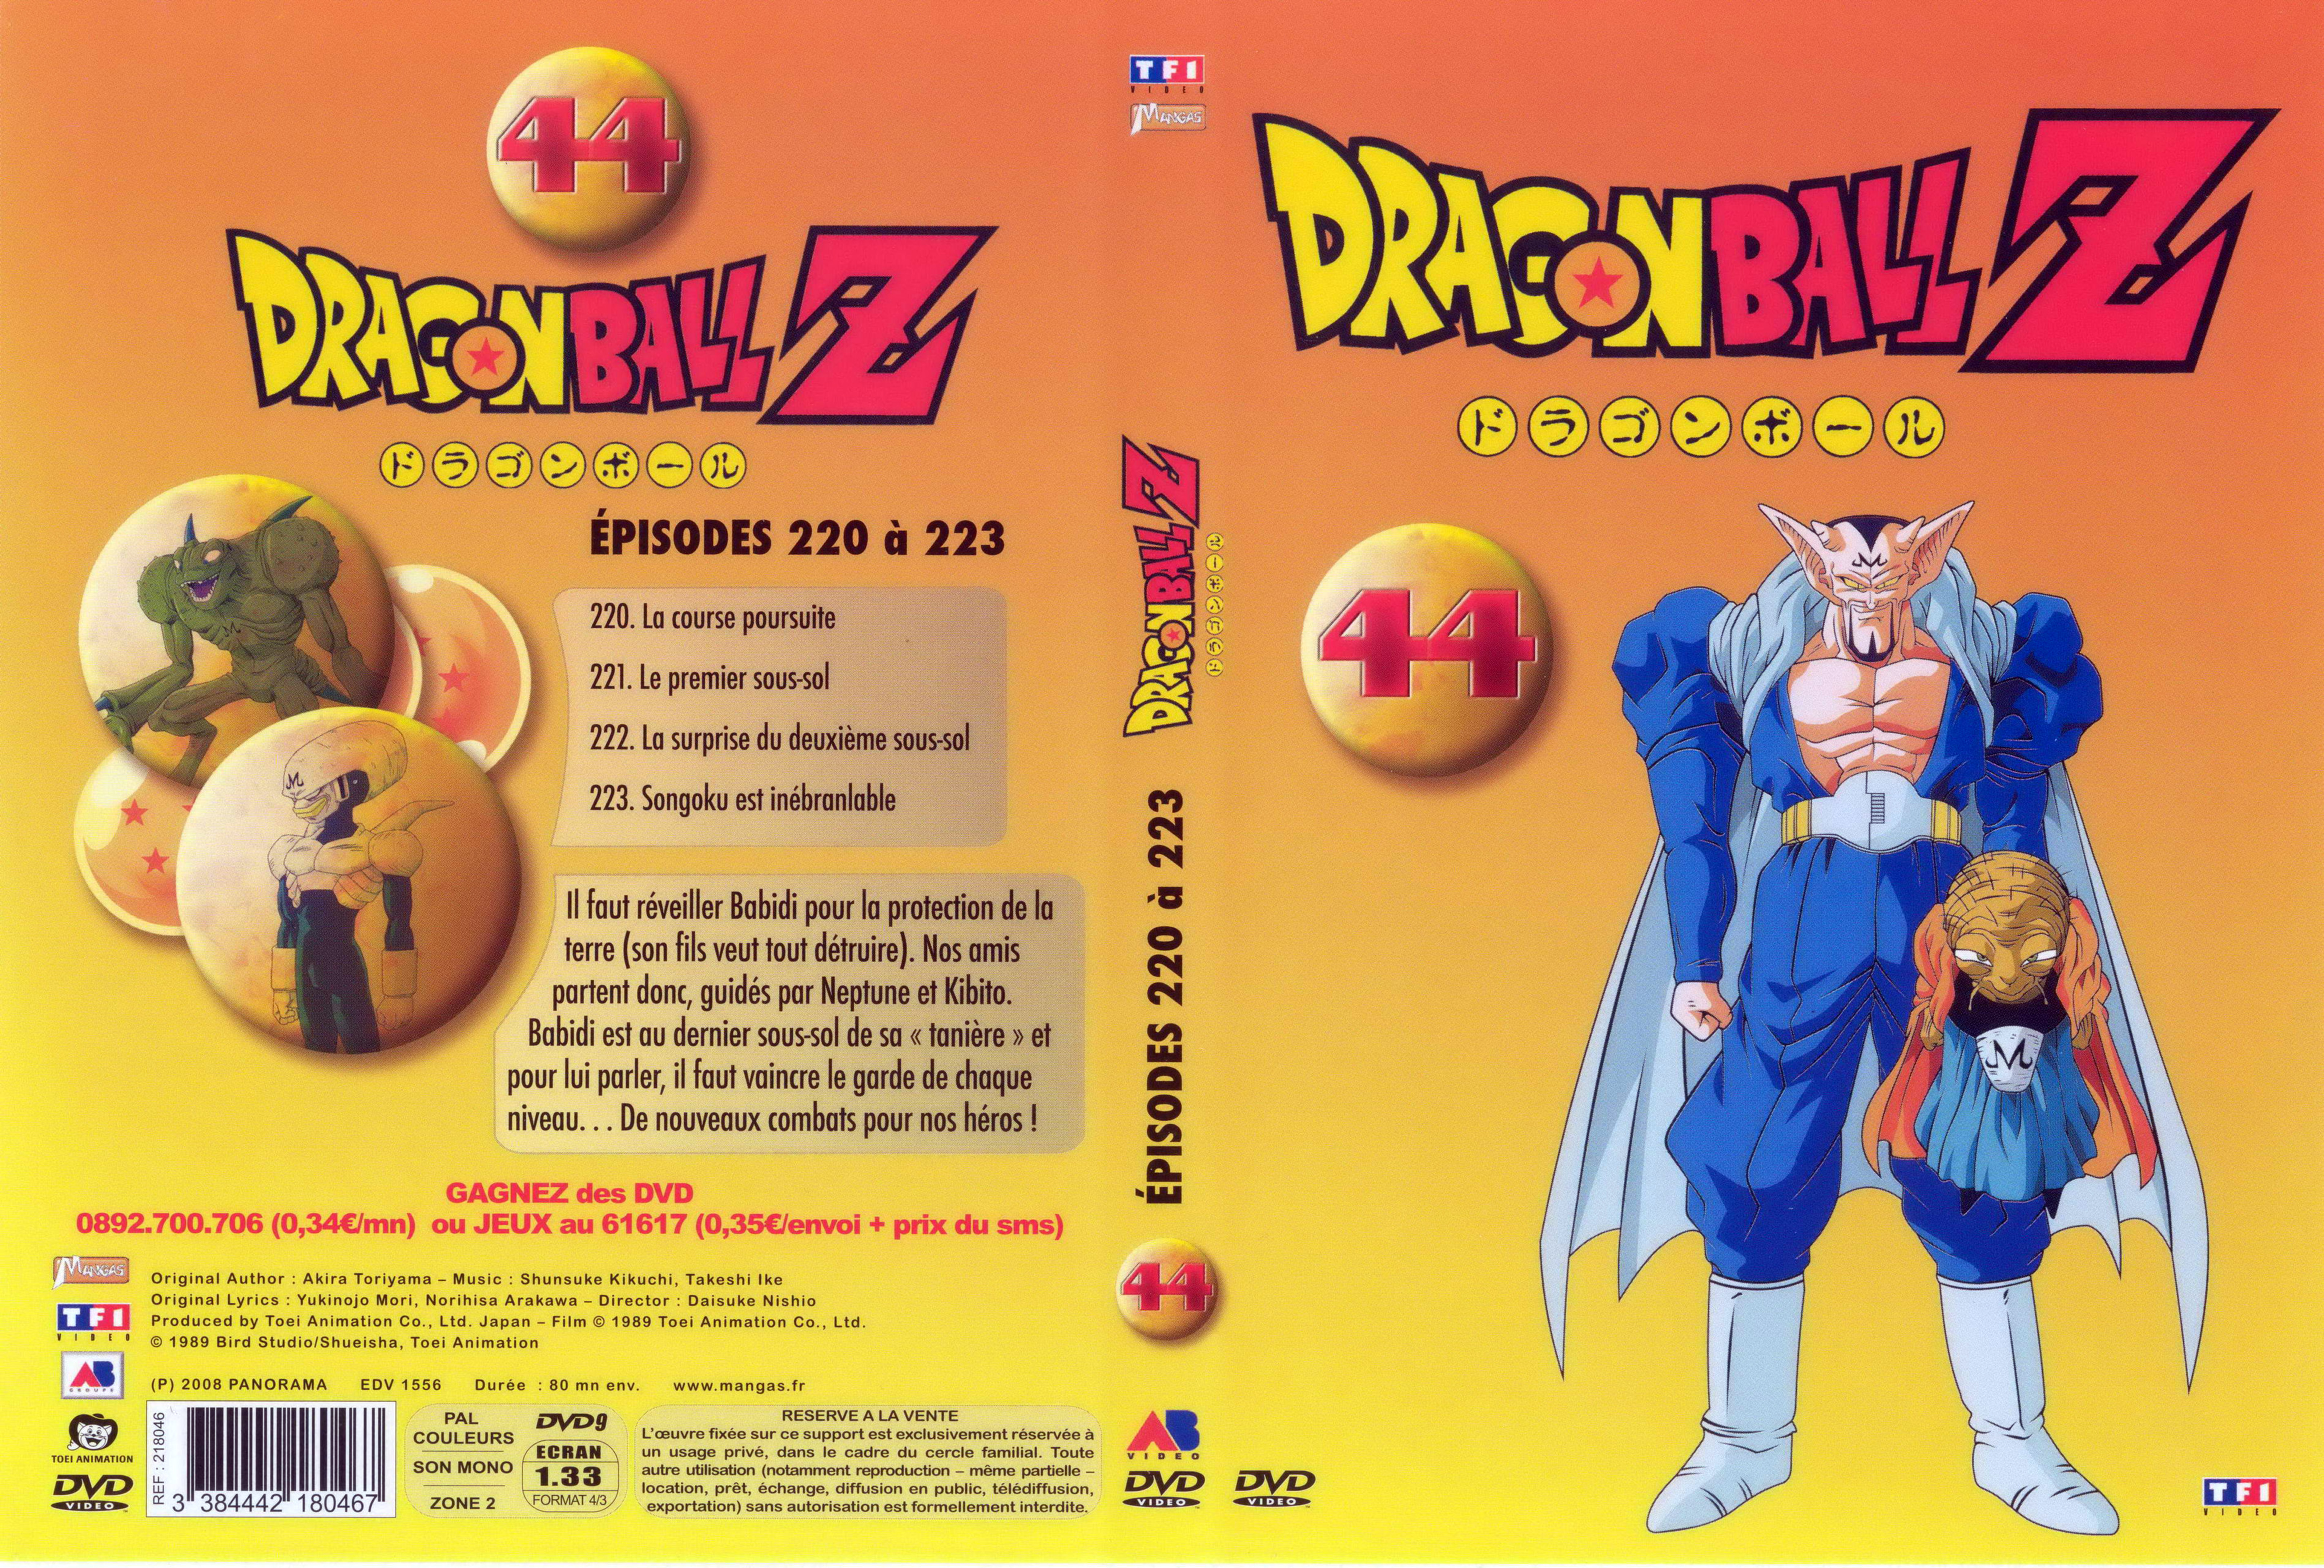 Jaquette DVD Dragon ball Z vol 44